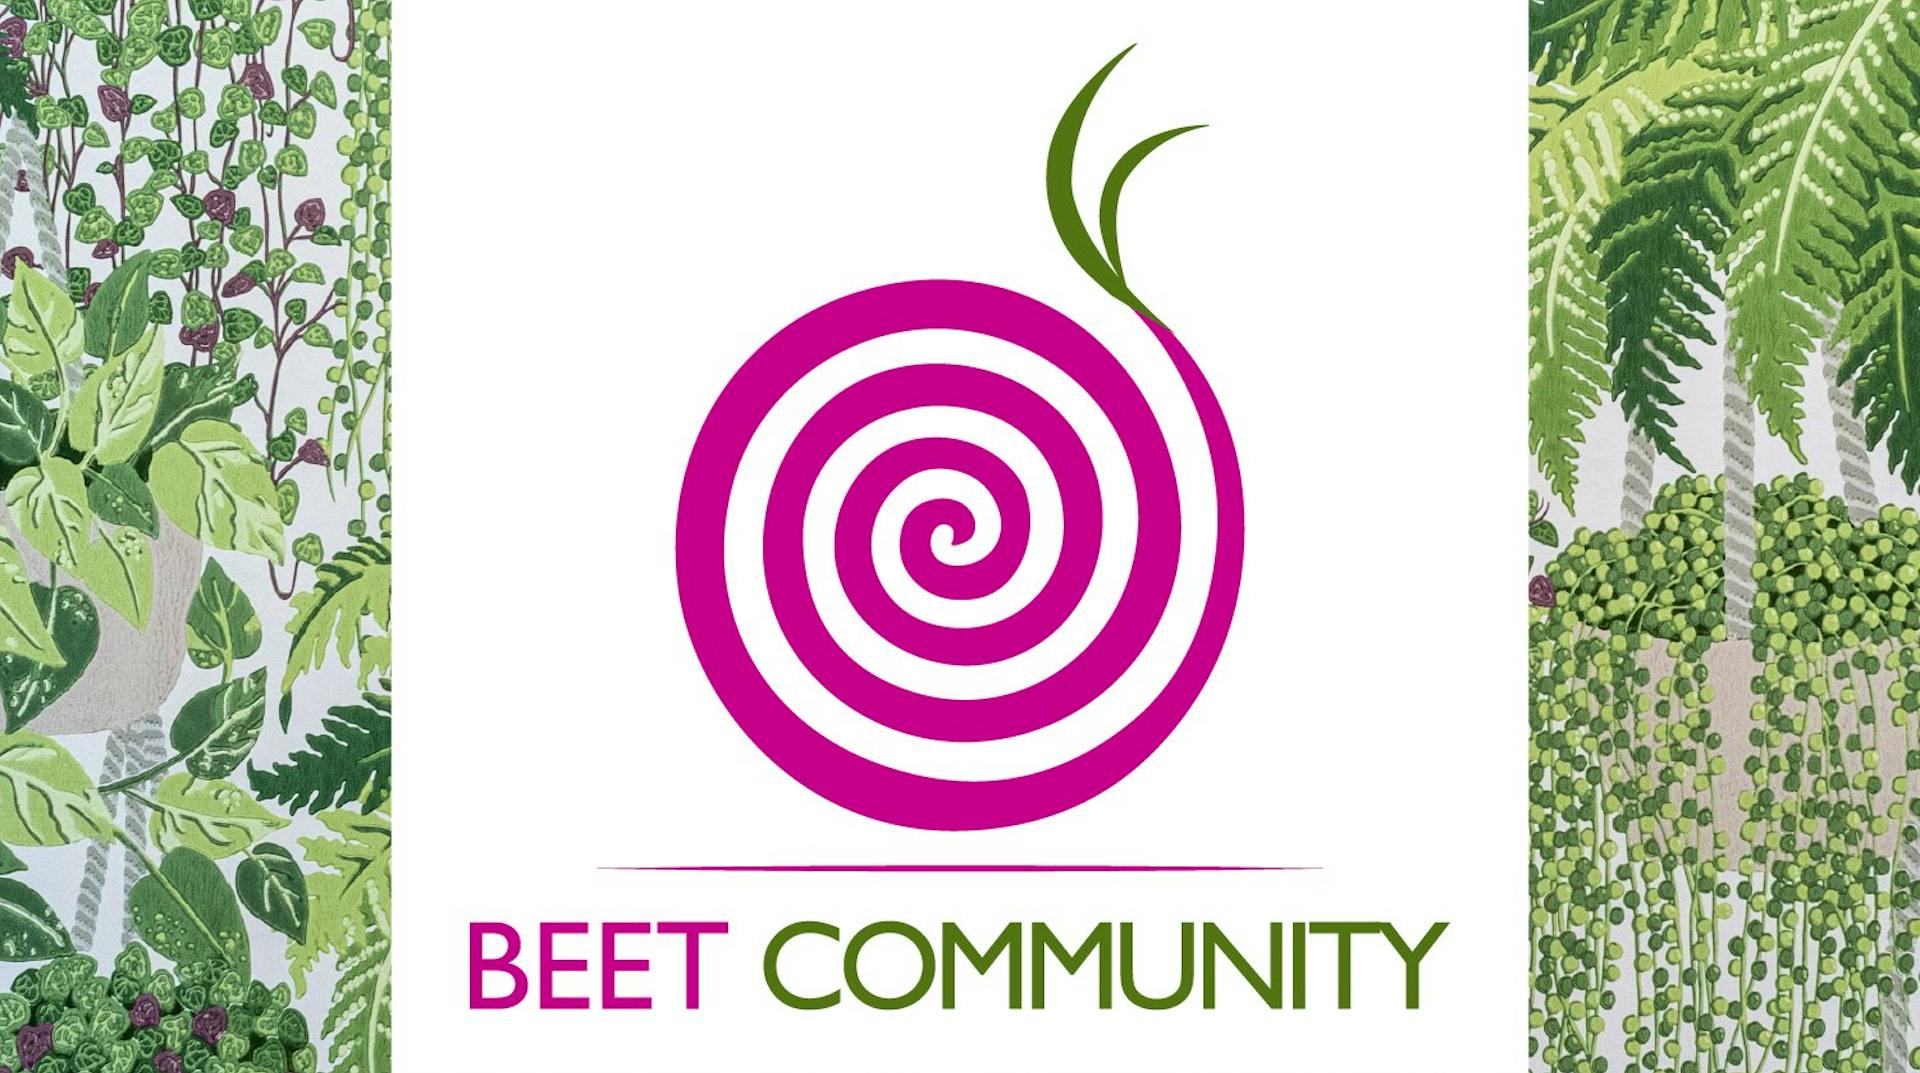 Beetcommunity